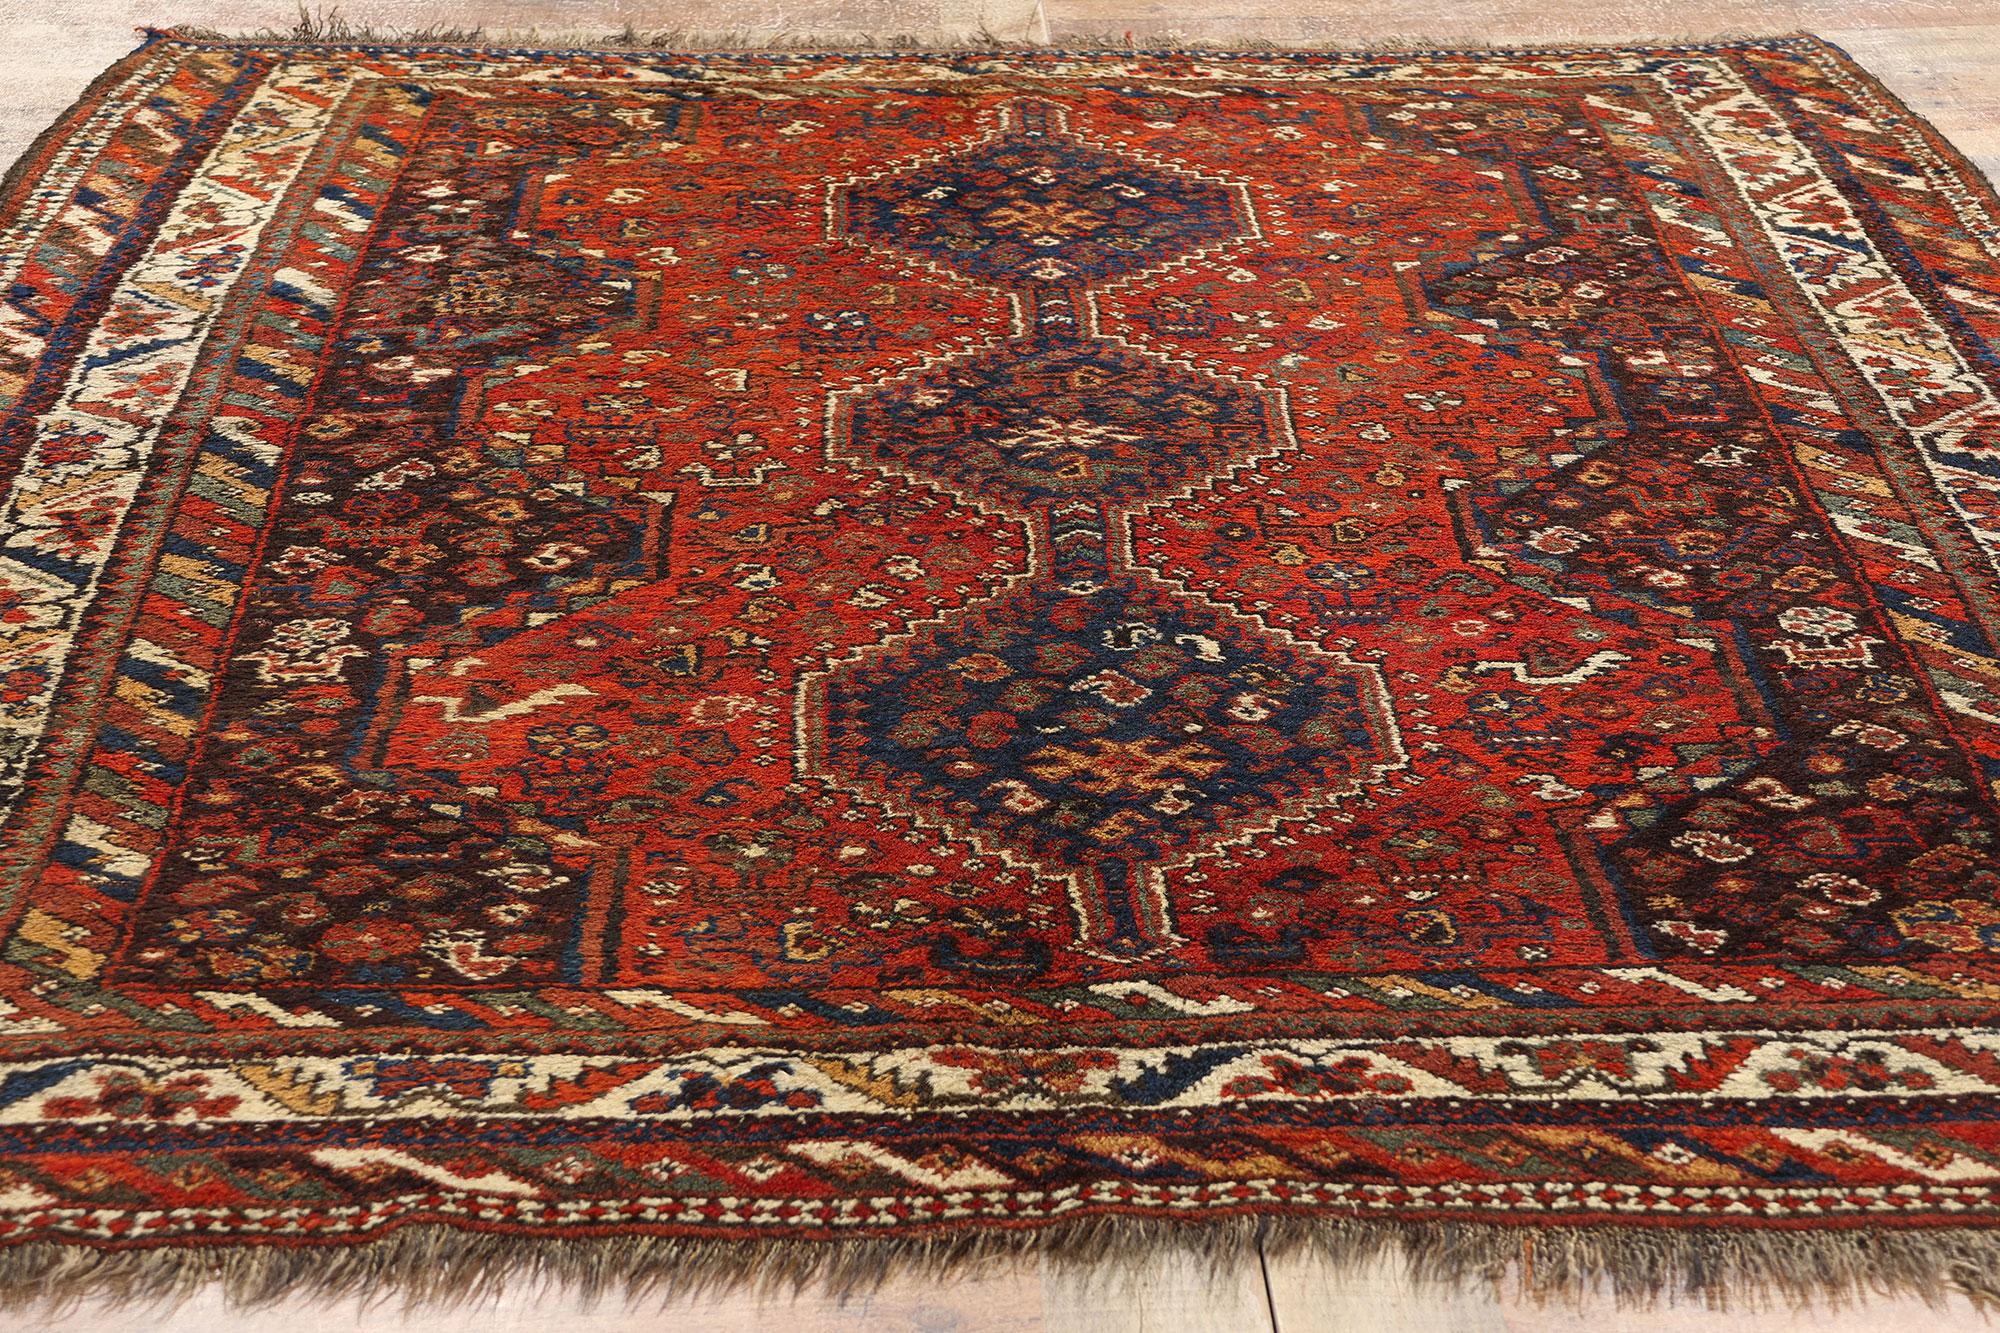 Late 19th Century Antique Persian Shiraz Carpet For Sale 2